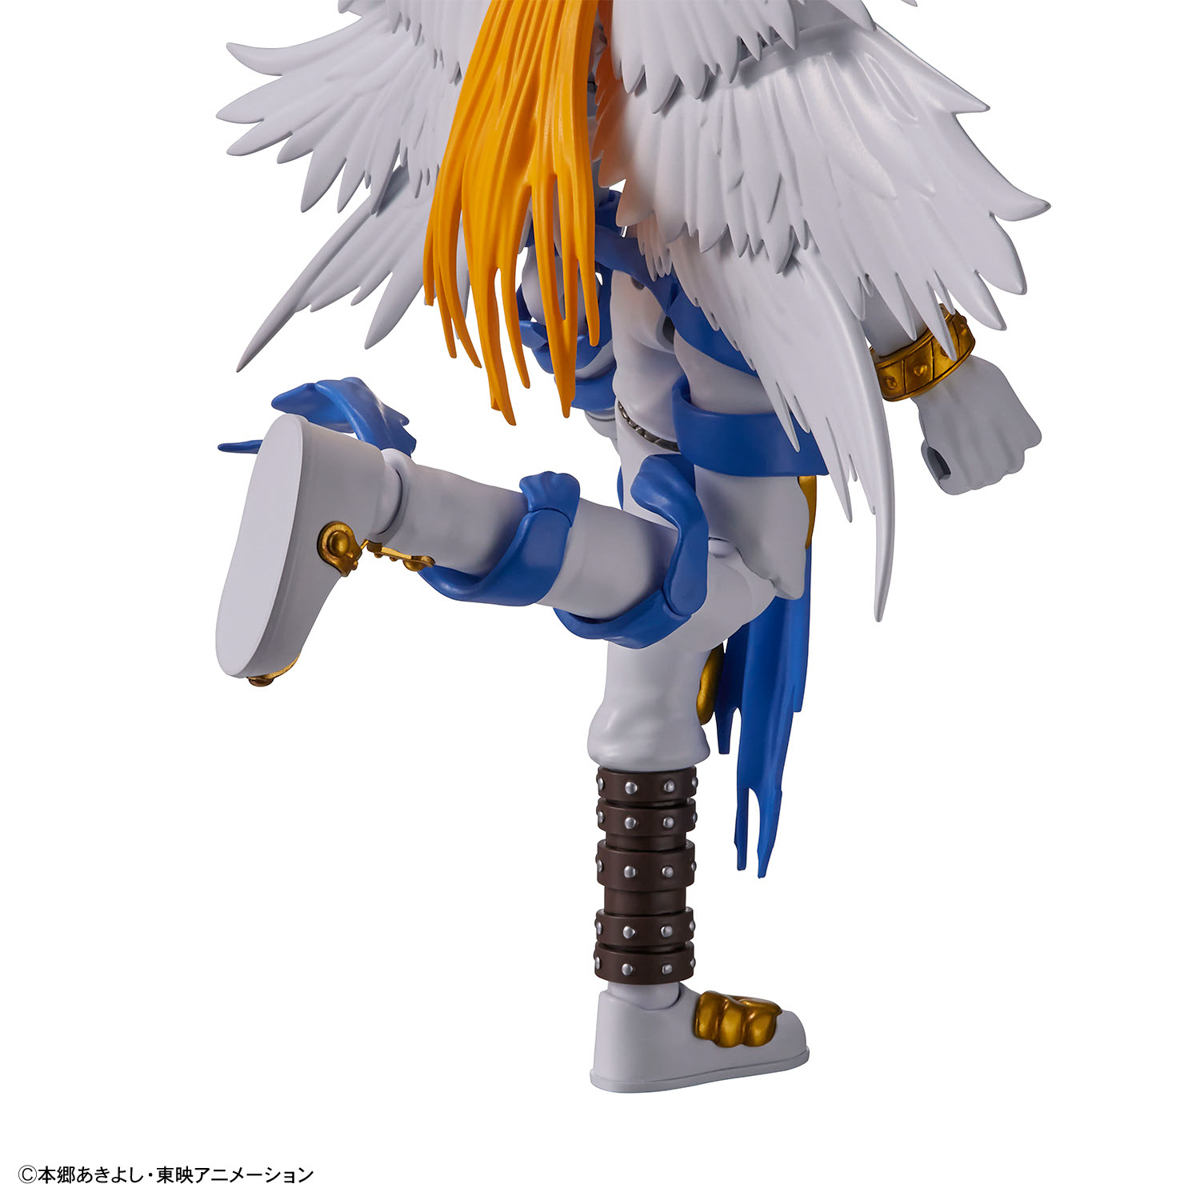 Figure-rise Standard Angemon (Digimon)